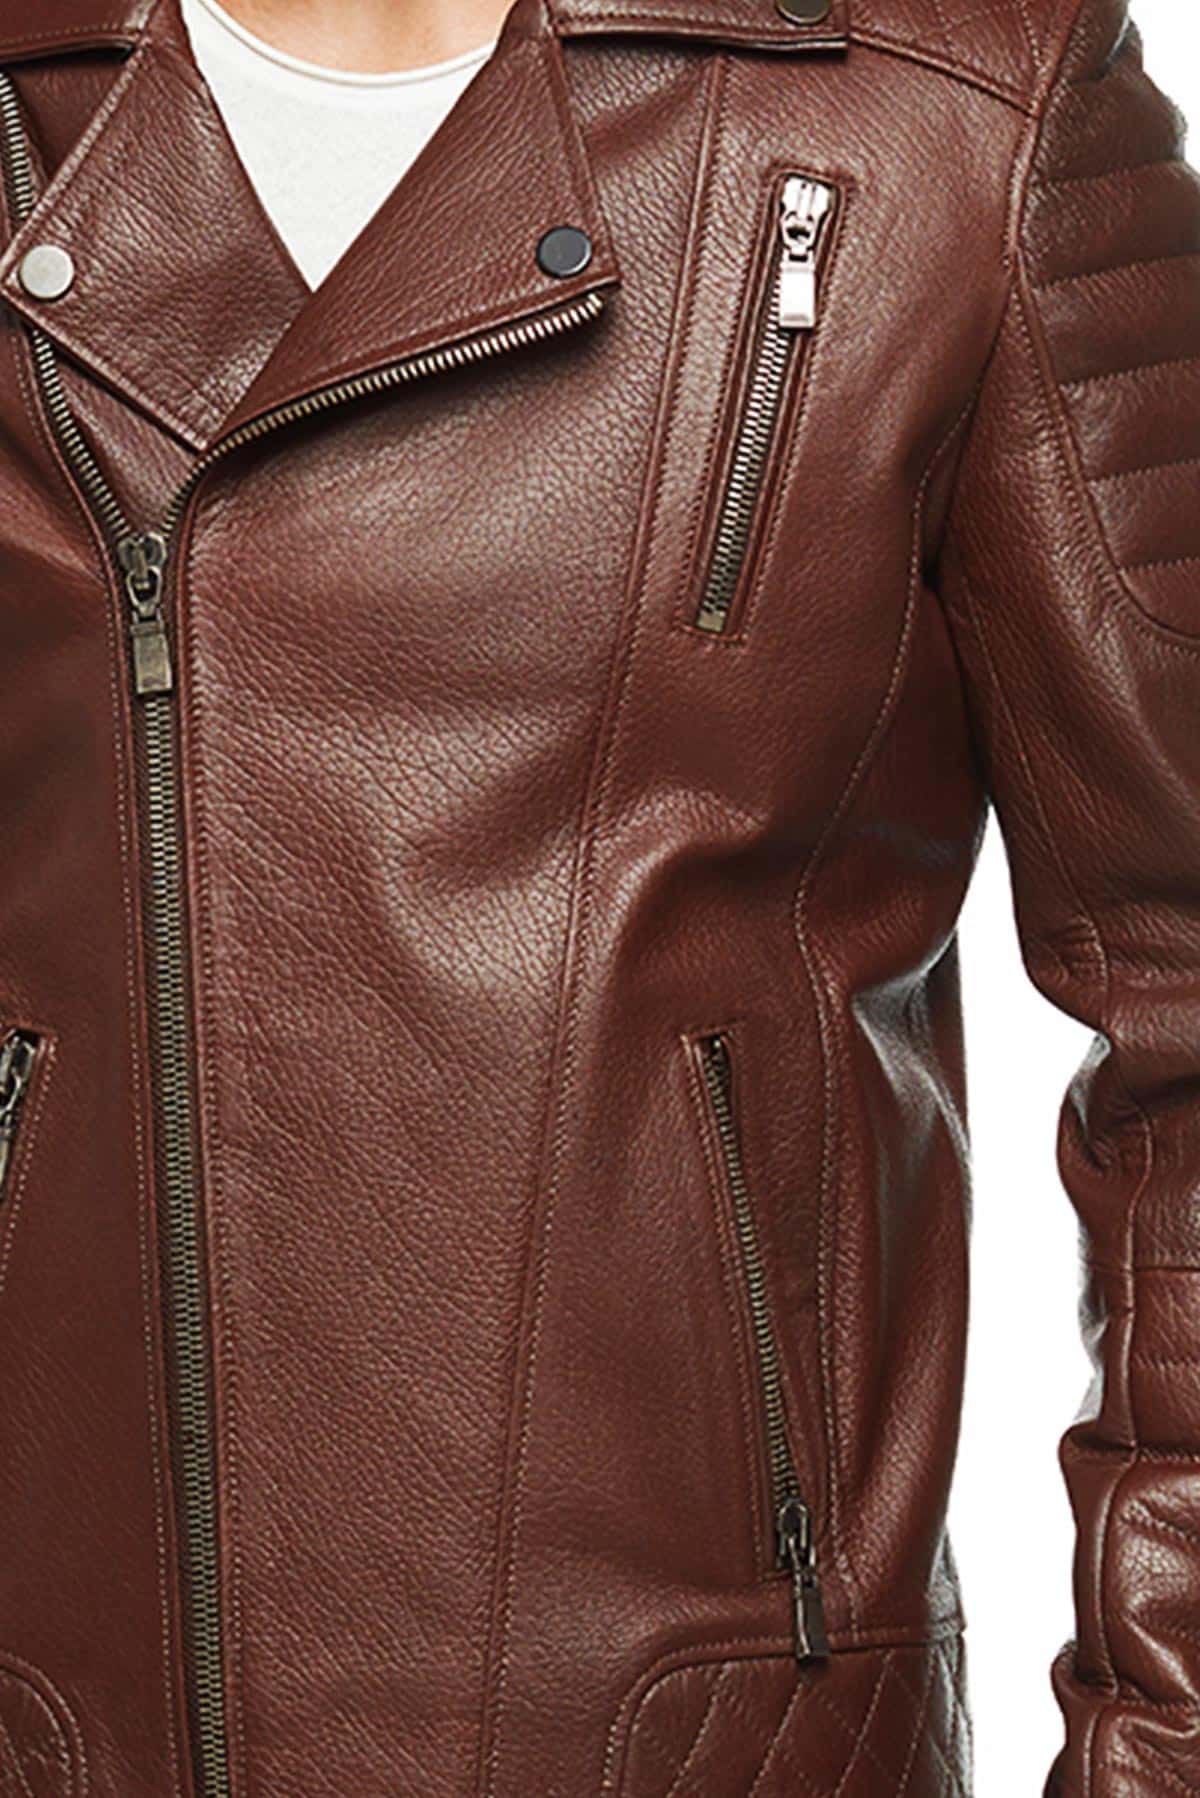 lapel collar brando leather jacket